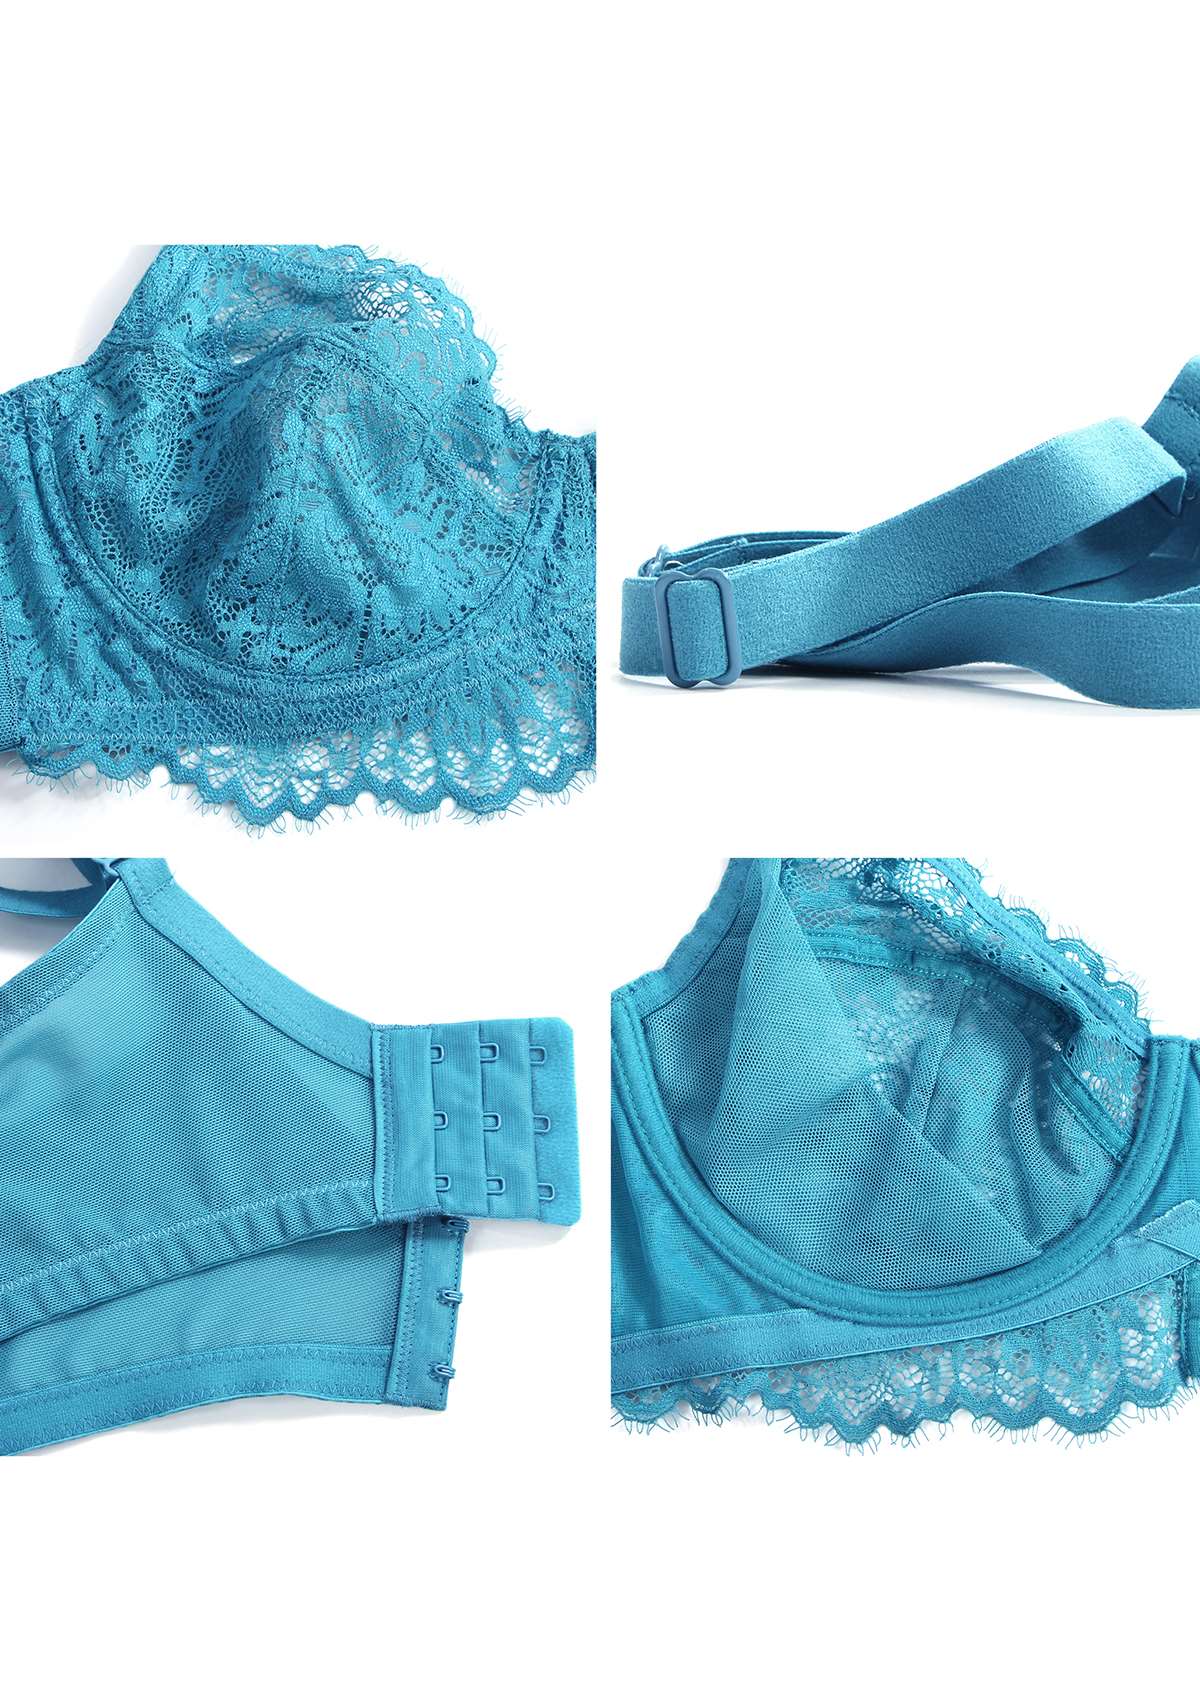 HSIA Sunflower Lace Bra And Panty: Cute Plus Size Comfort Bra - Horizon Blue / 34 / G